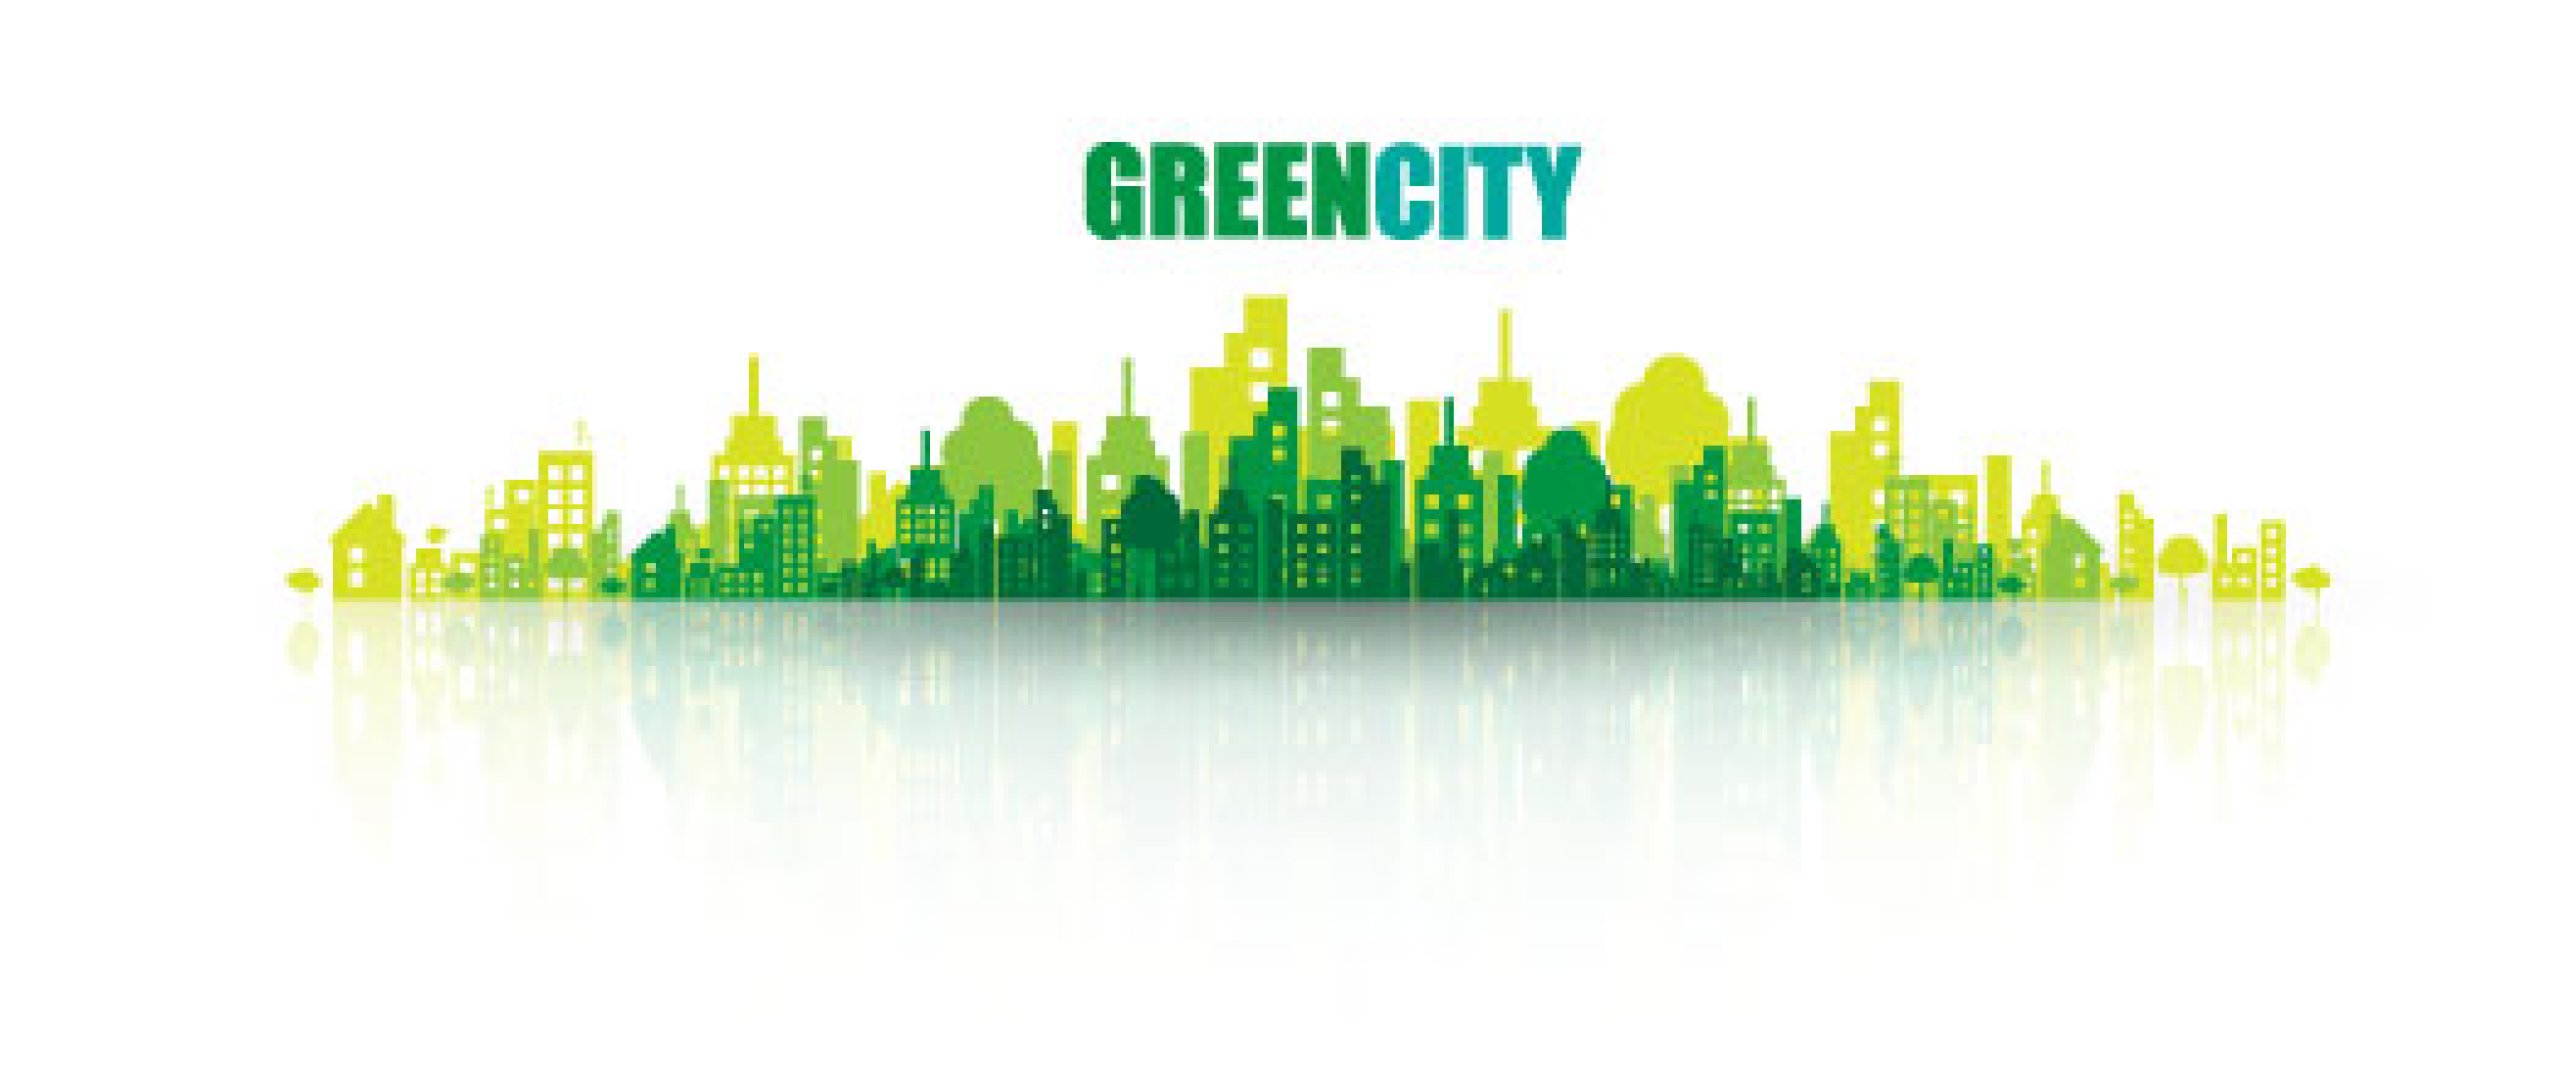 Green-city-Ecology-concept_Quelle: shutterstock_464681744_vs148